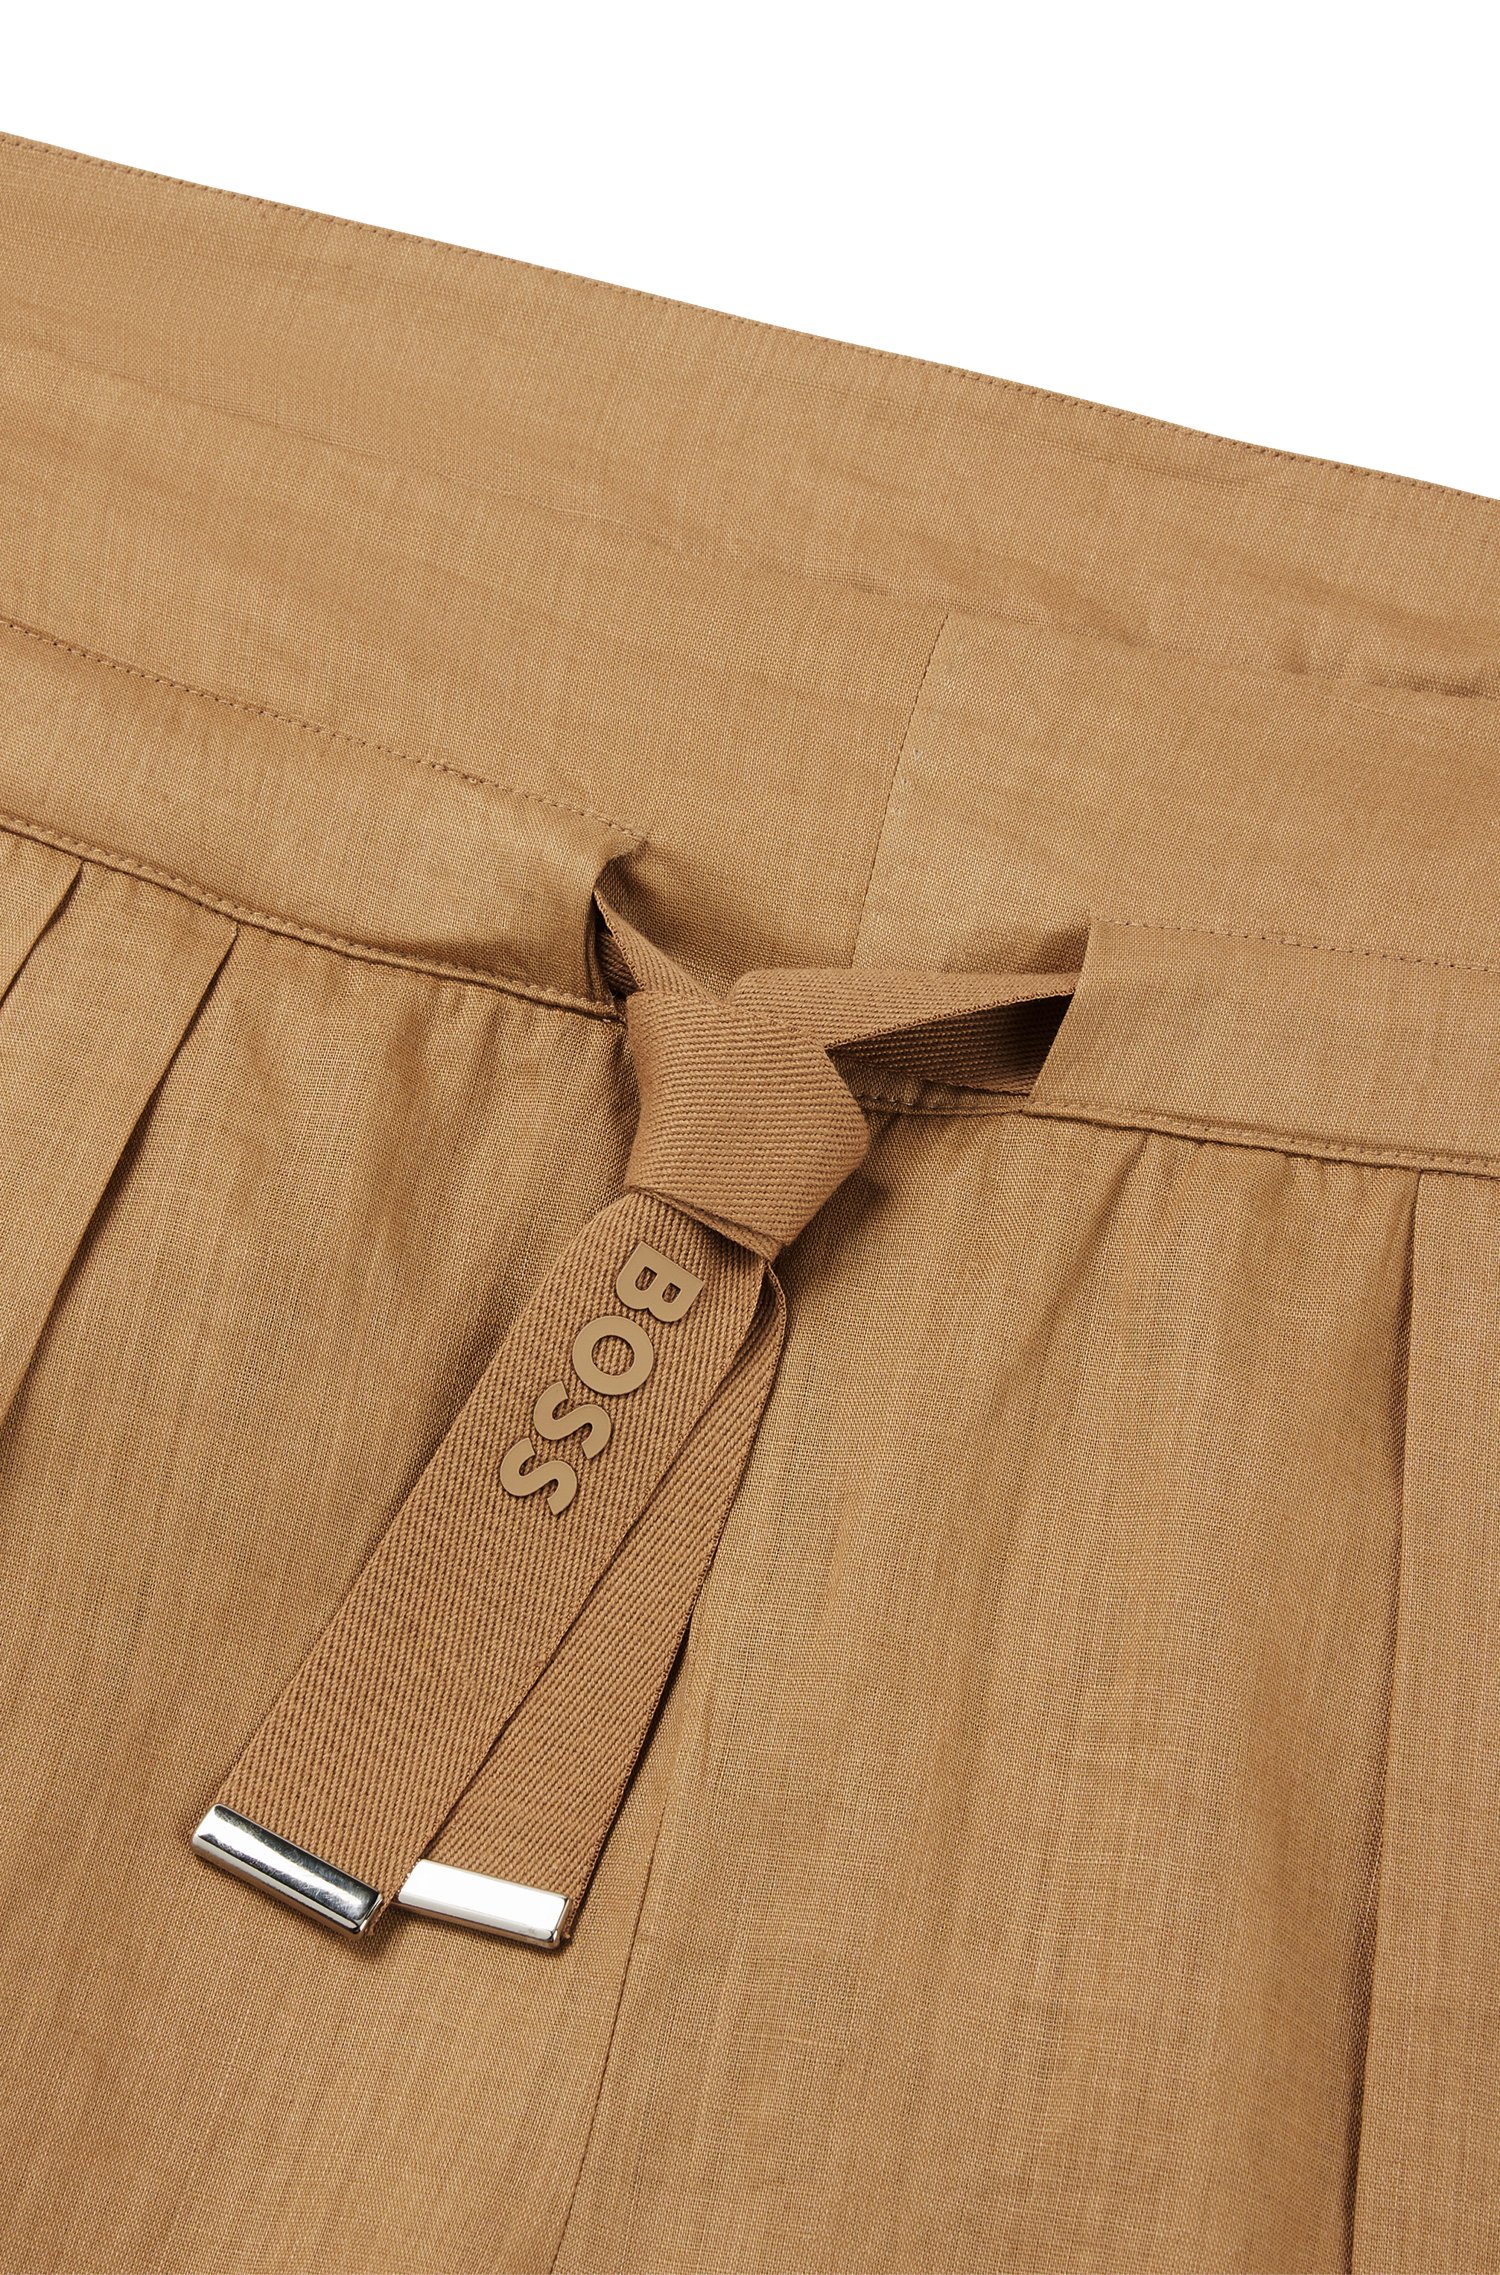 Shorts estilo paperbag regular fit en lona de ramio